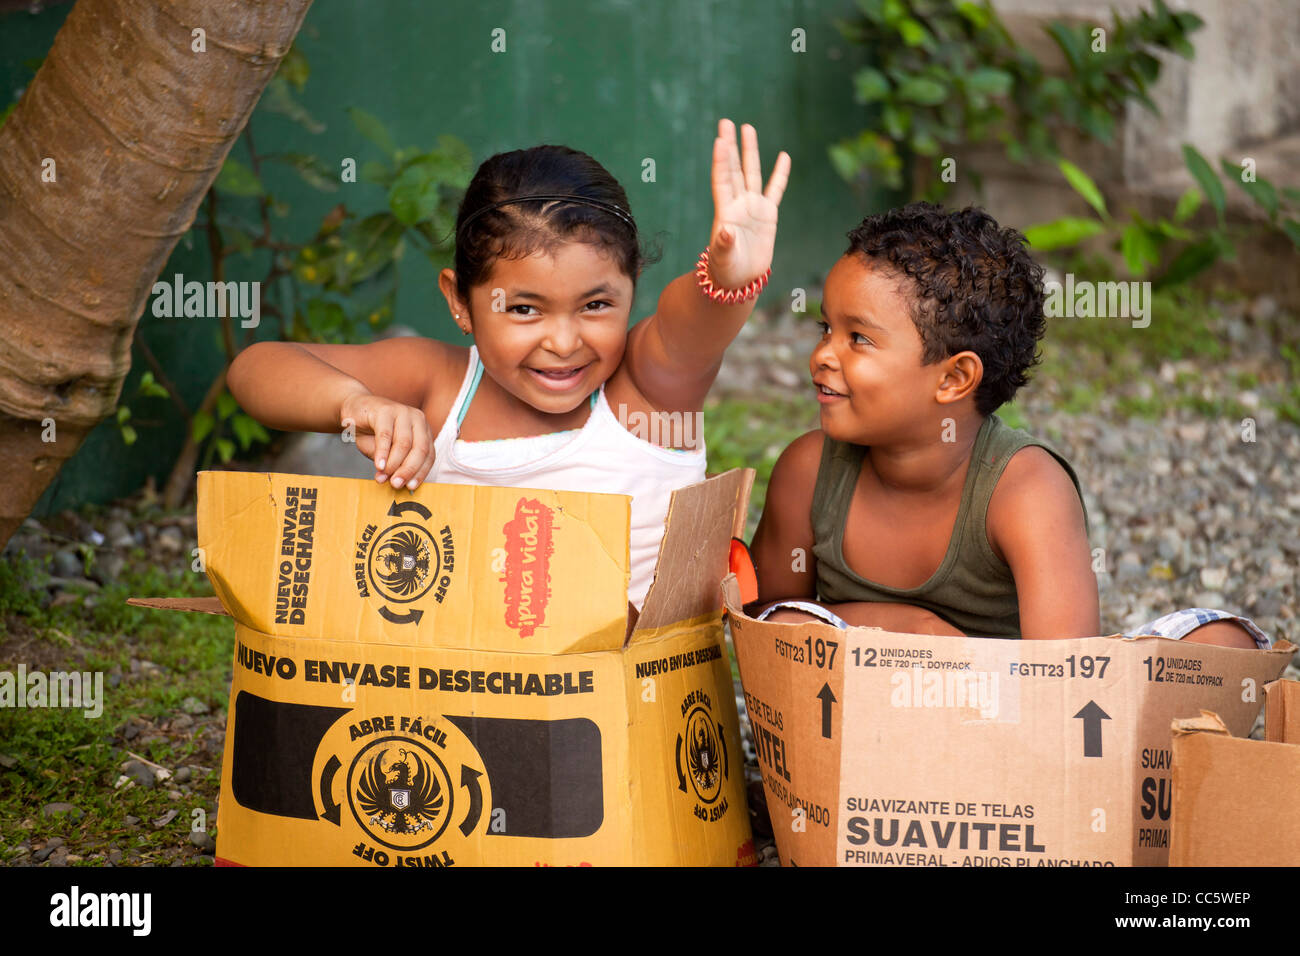 local children playing in a carton, Cahuita, Costa Rica, Central America Stock Photo